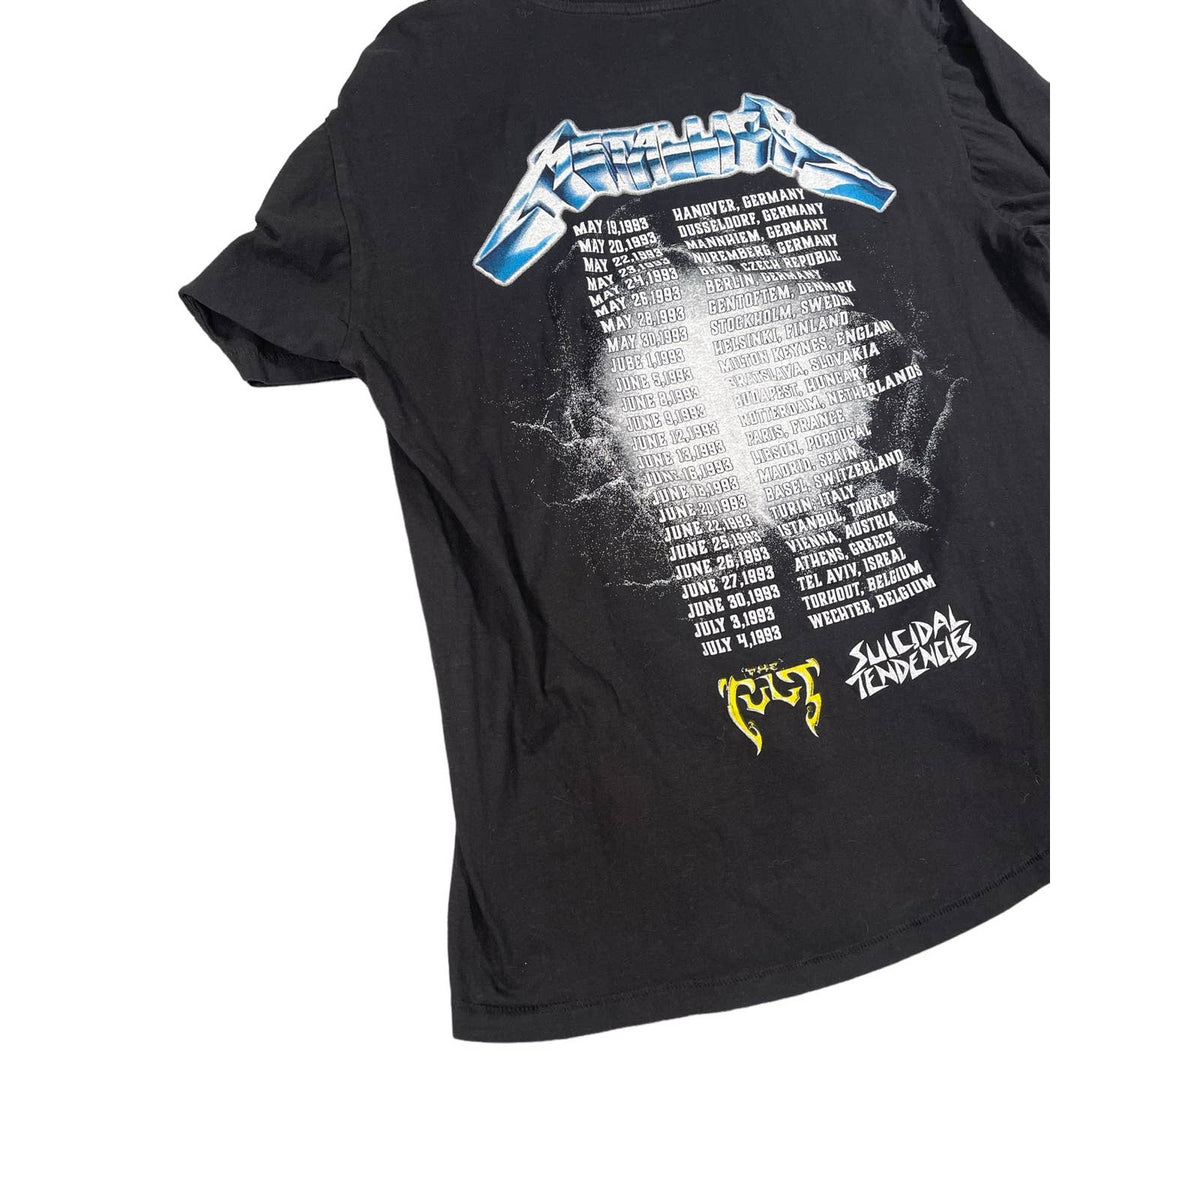 Vintage 1993 Metallica Tour T-Shirt